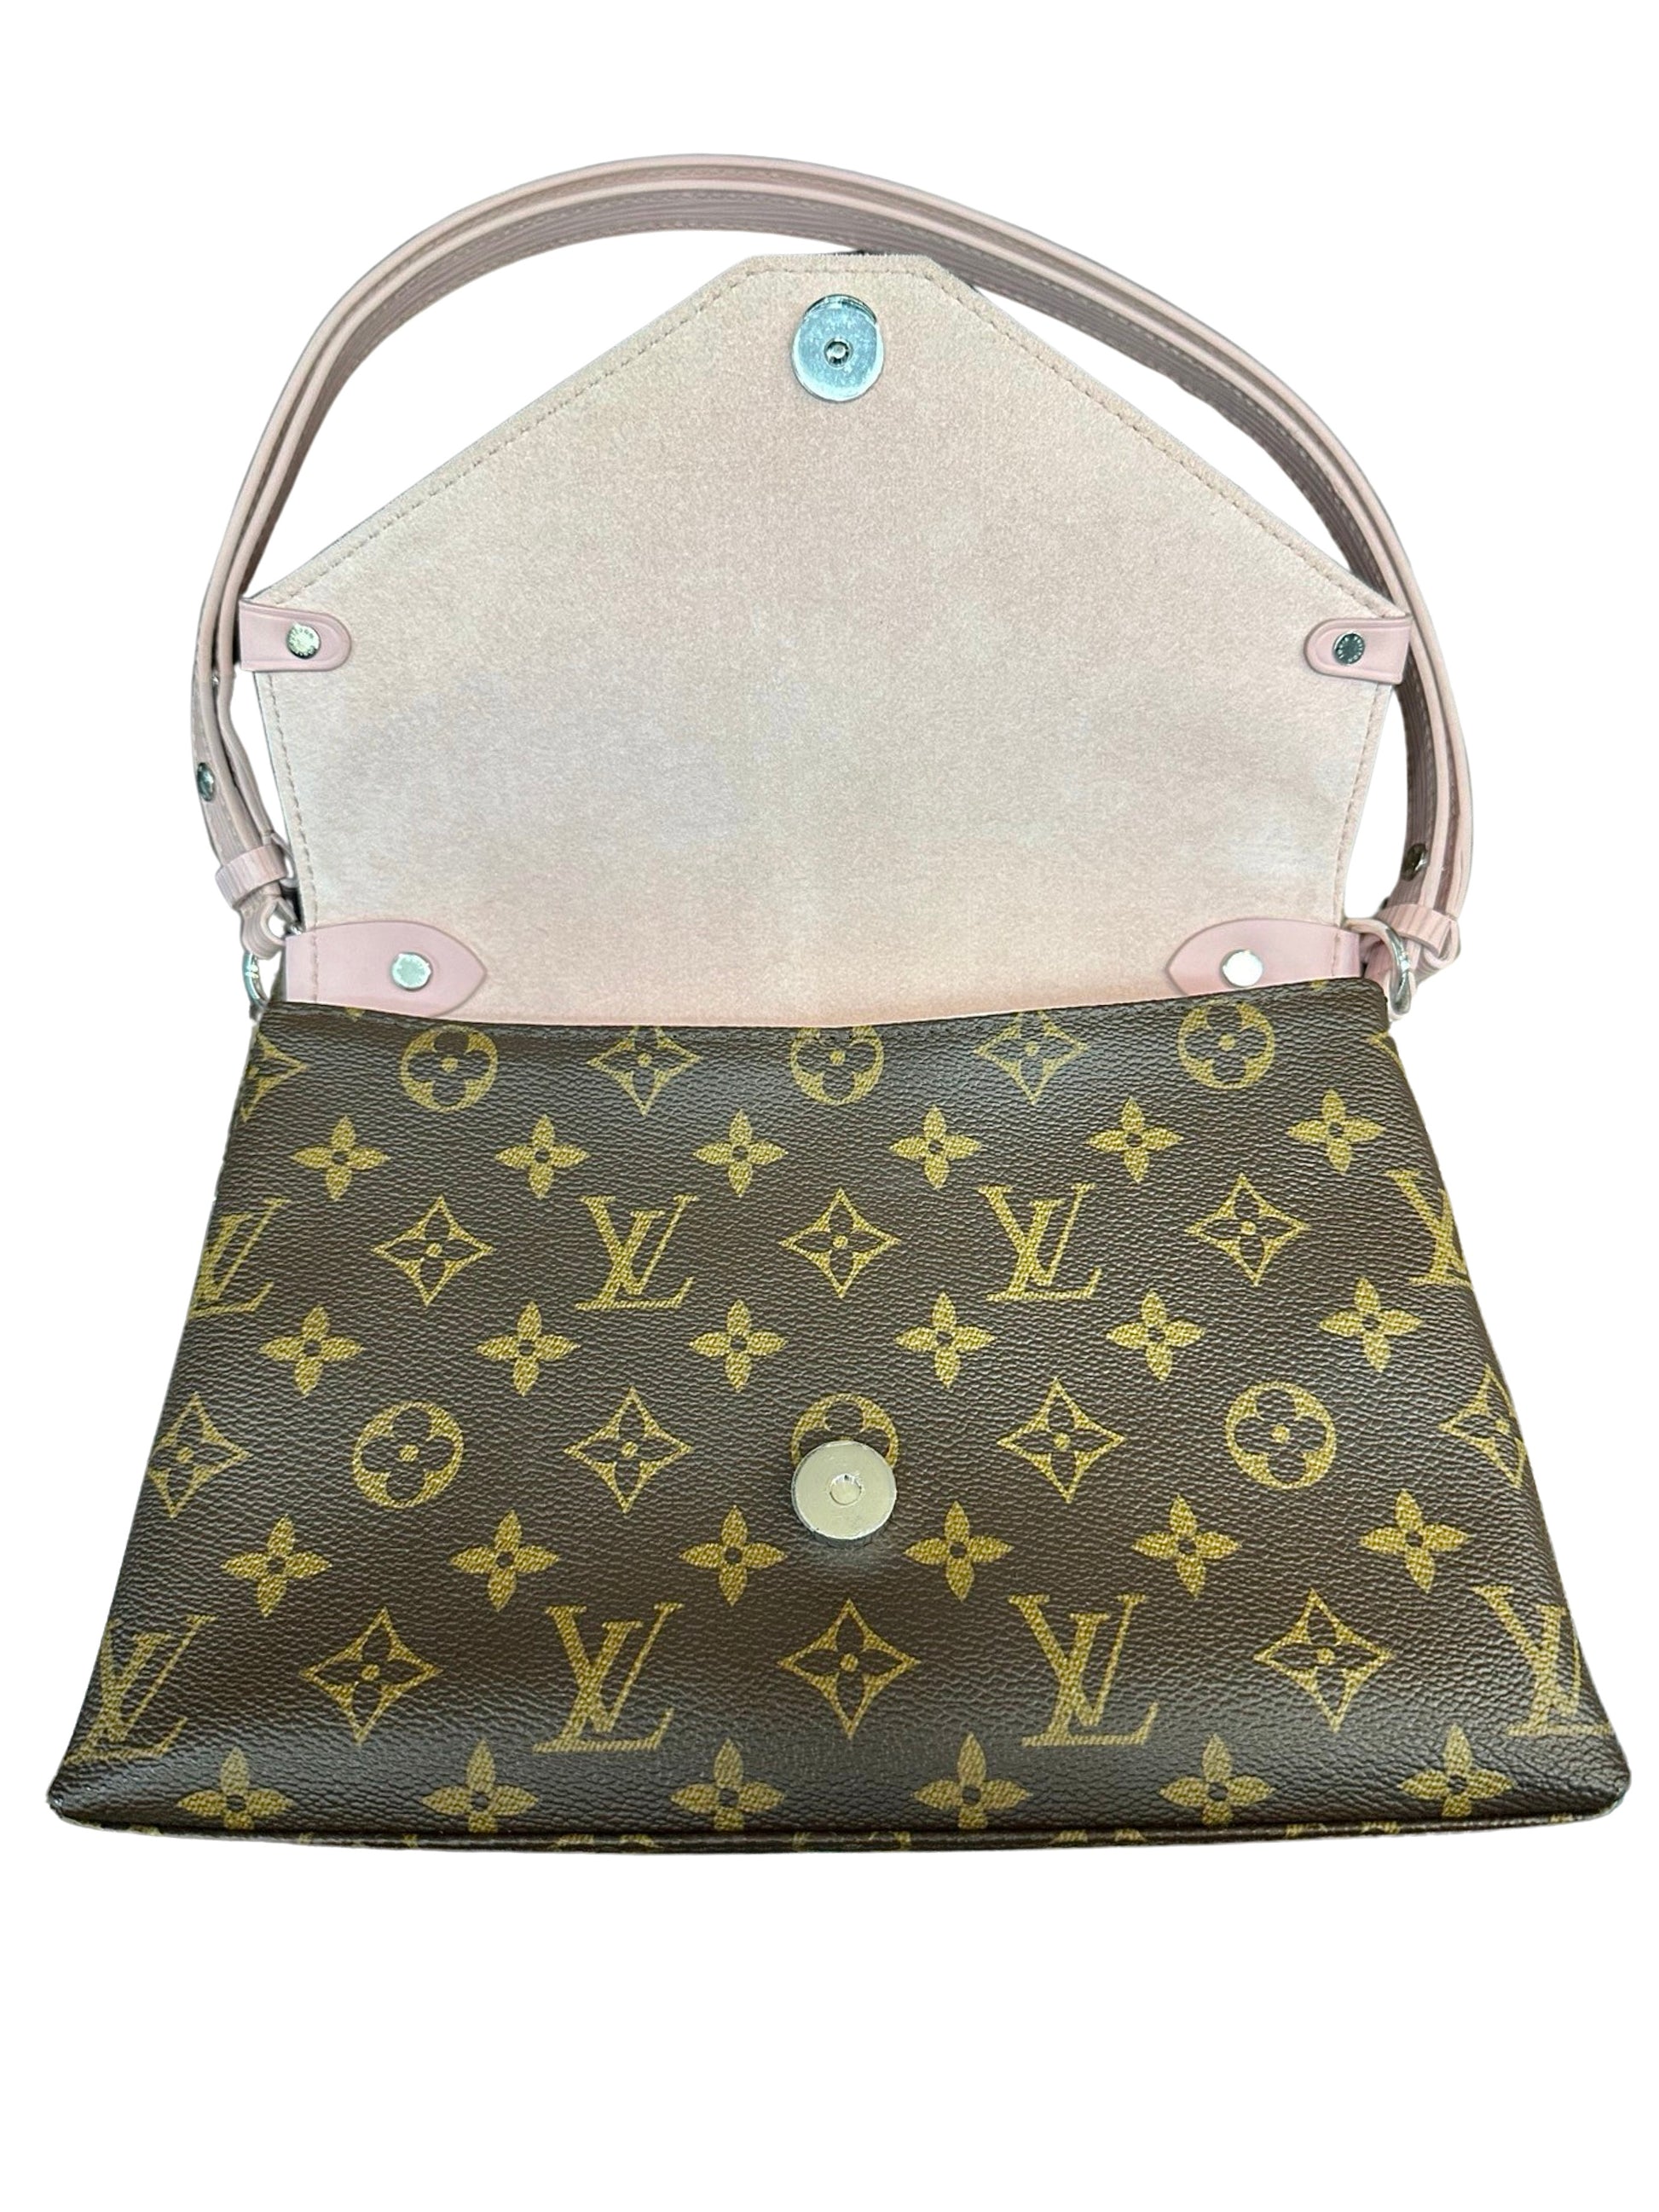 Open flap of handbag with light pink suede